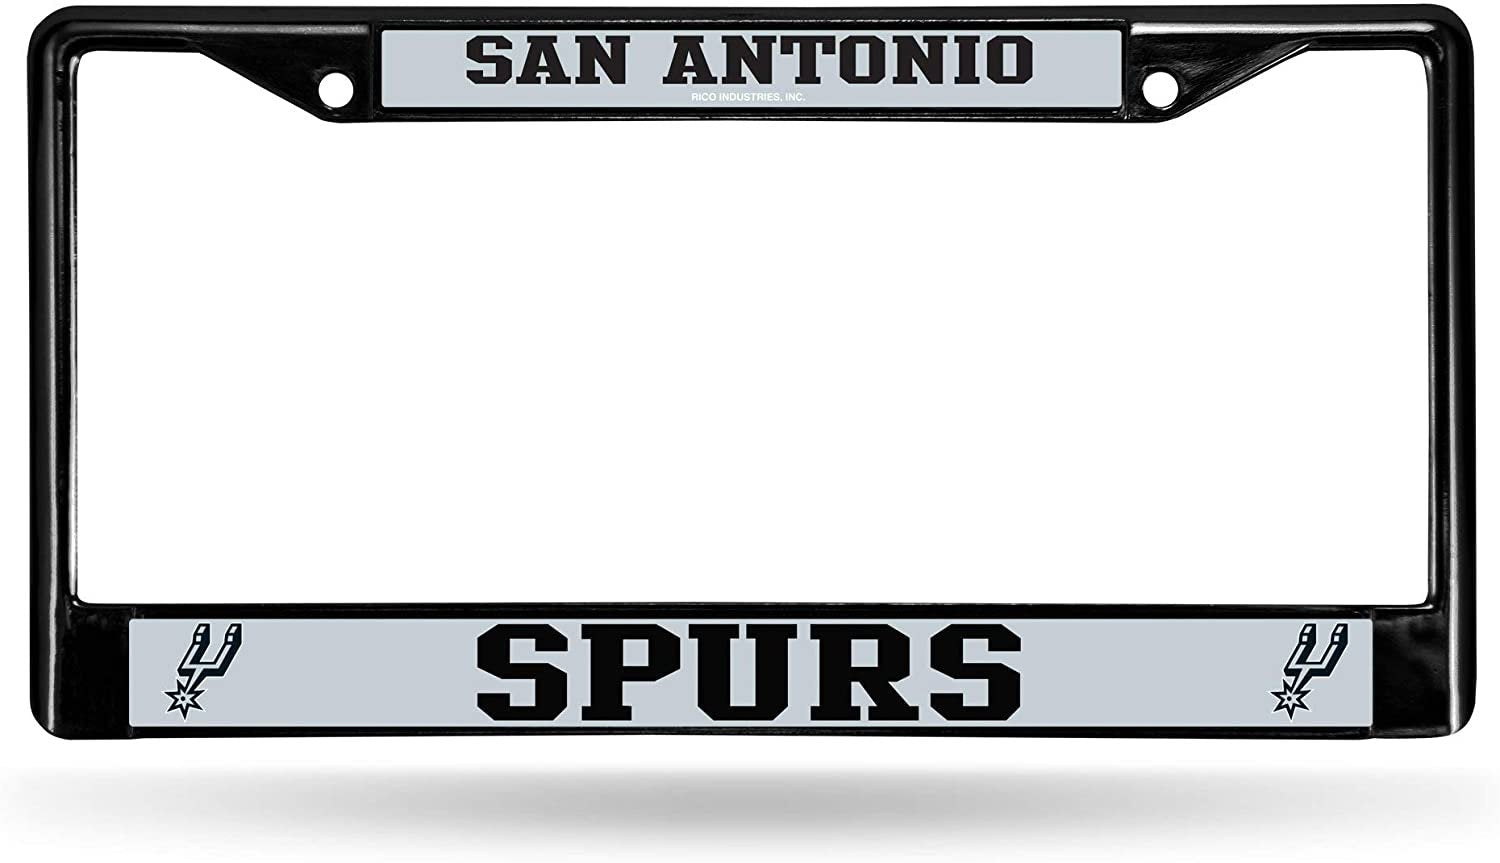 San Antonio Spurs Black Metal License License Plate Frame Tag Cover, 12x6 Inch